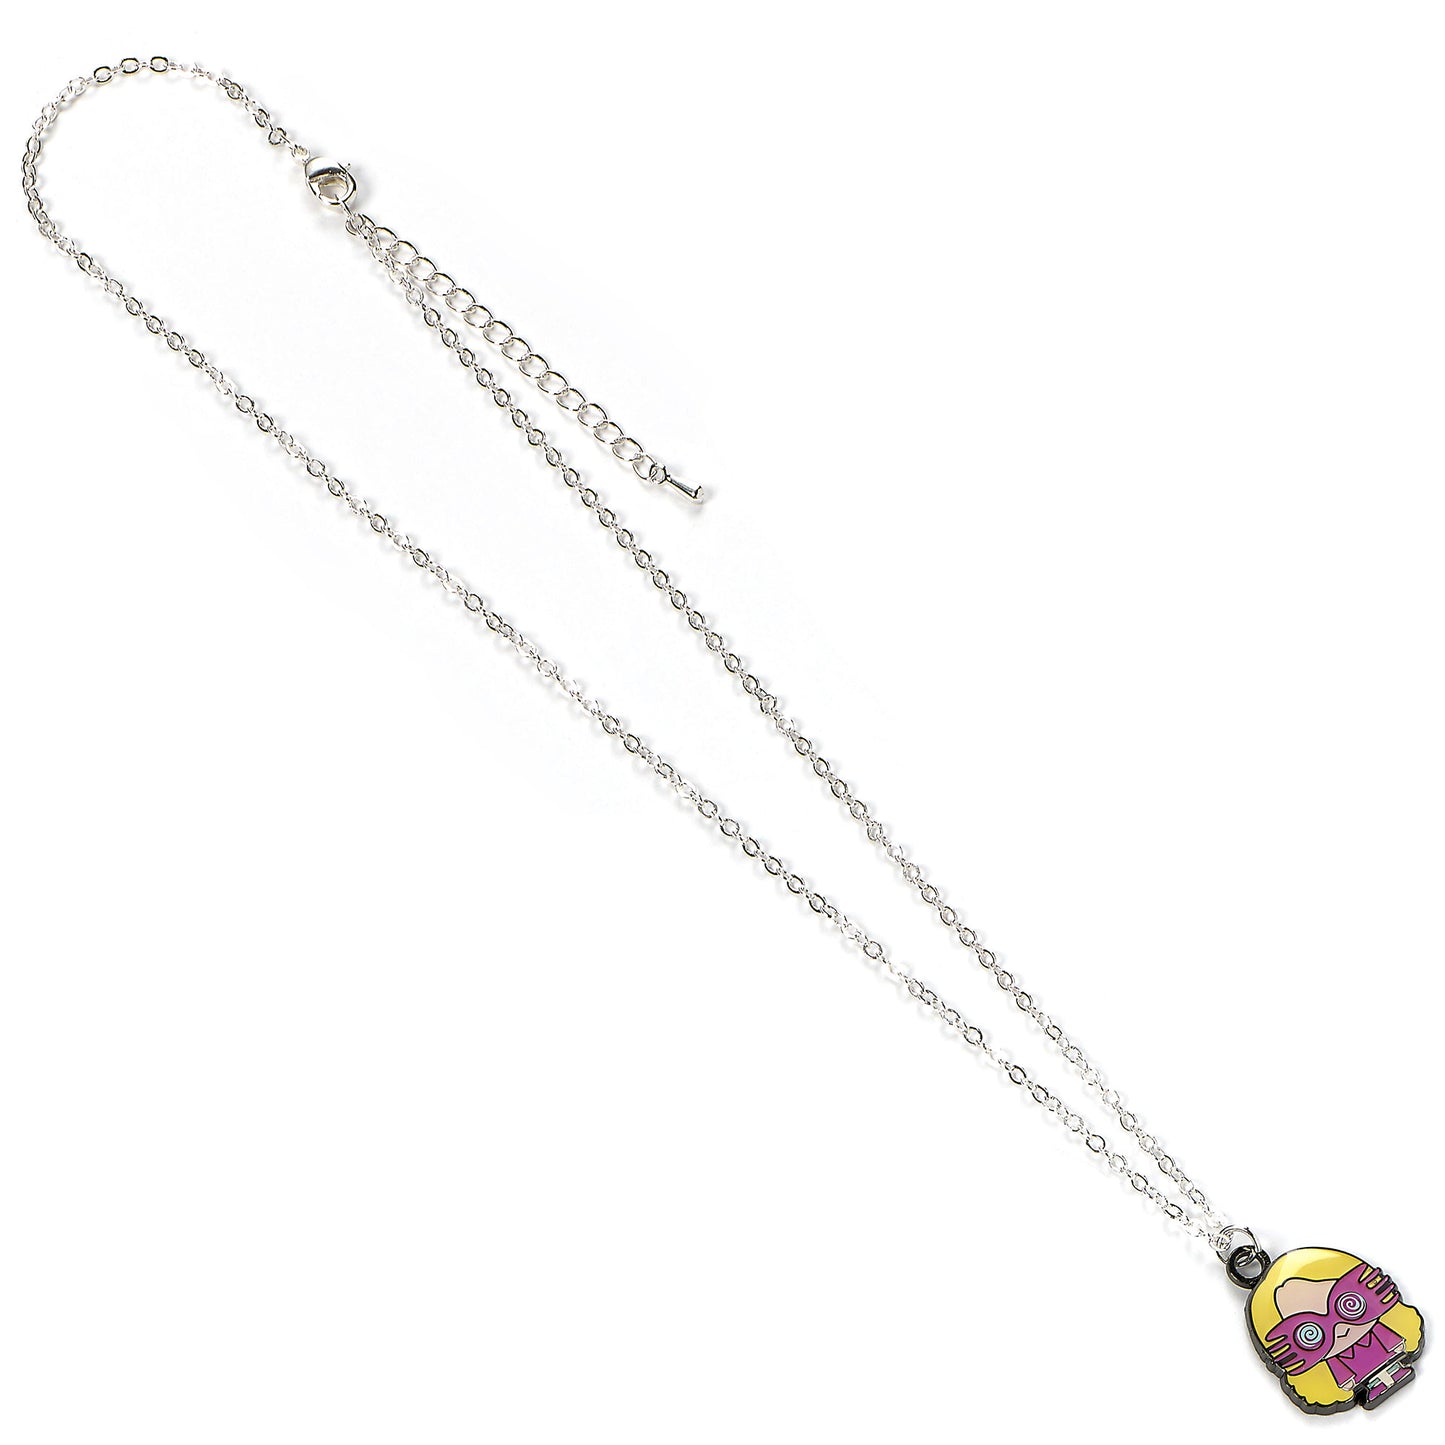 Harry Potter Luna Lovegood Chibi Style Necklace - Silver